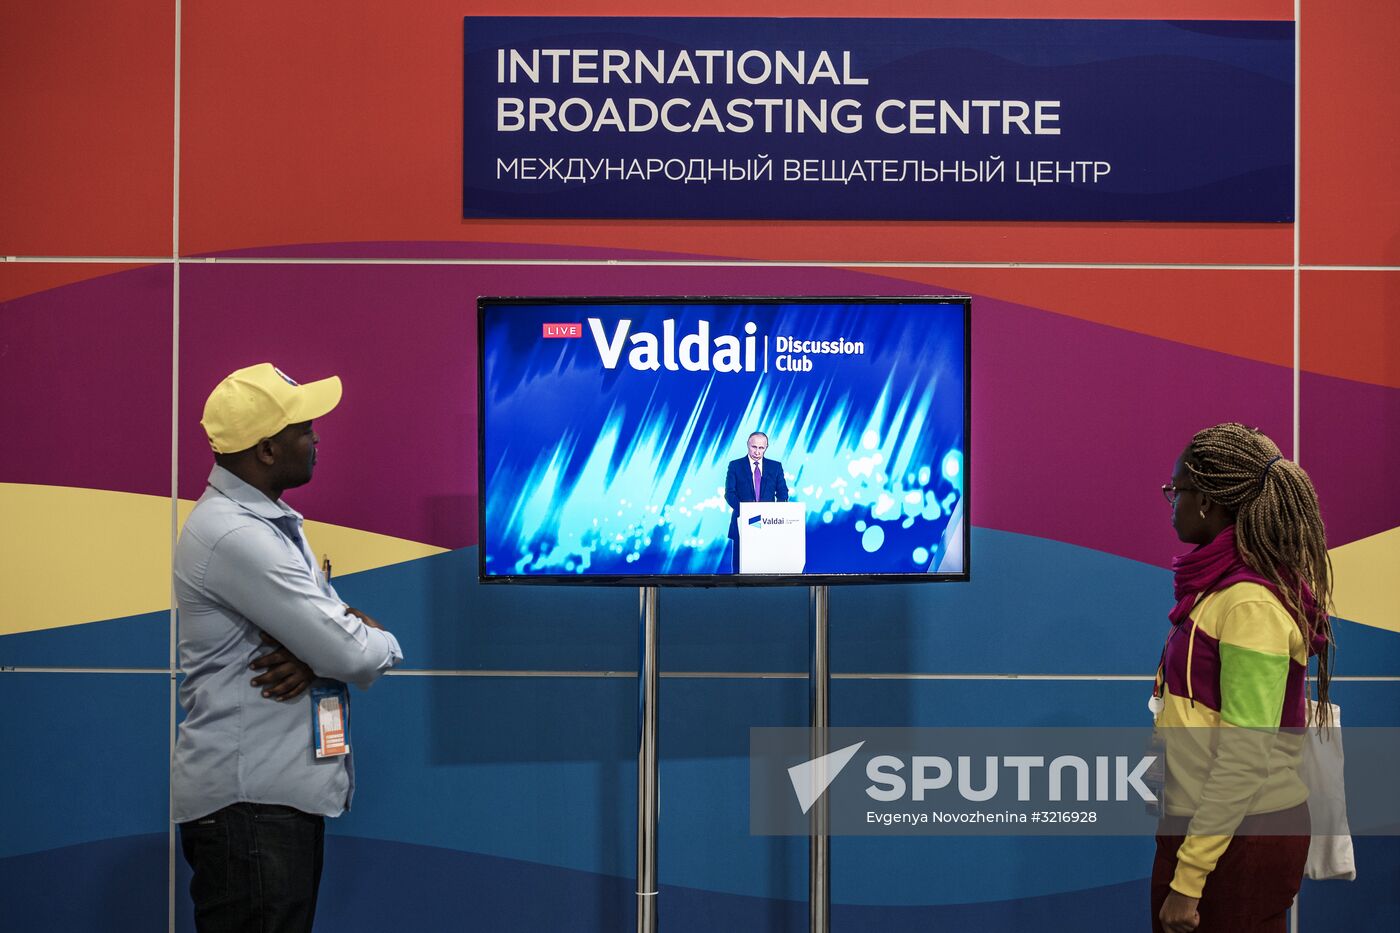 Broadcasting Vladimir Putin's speech at Valdai International Discussion Club meeting